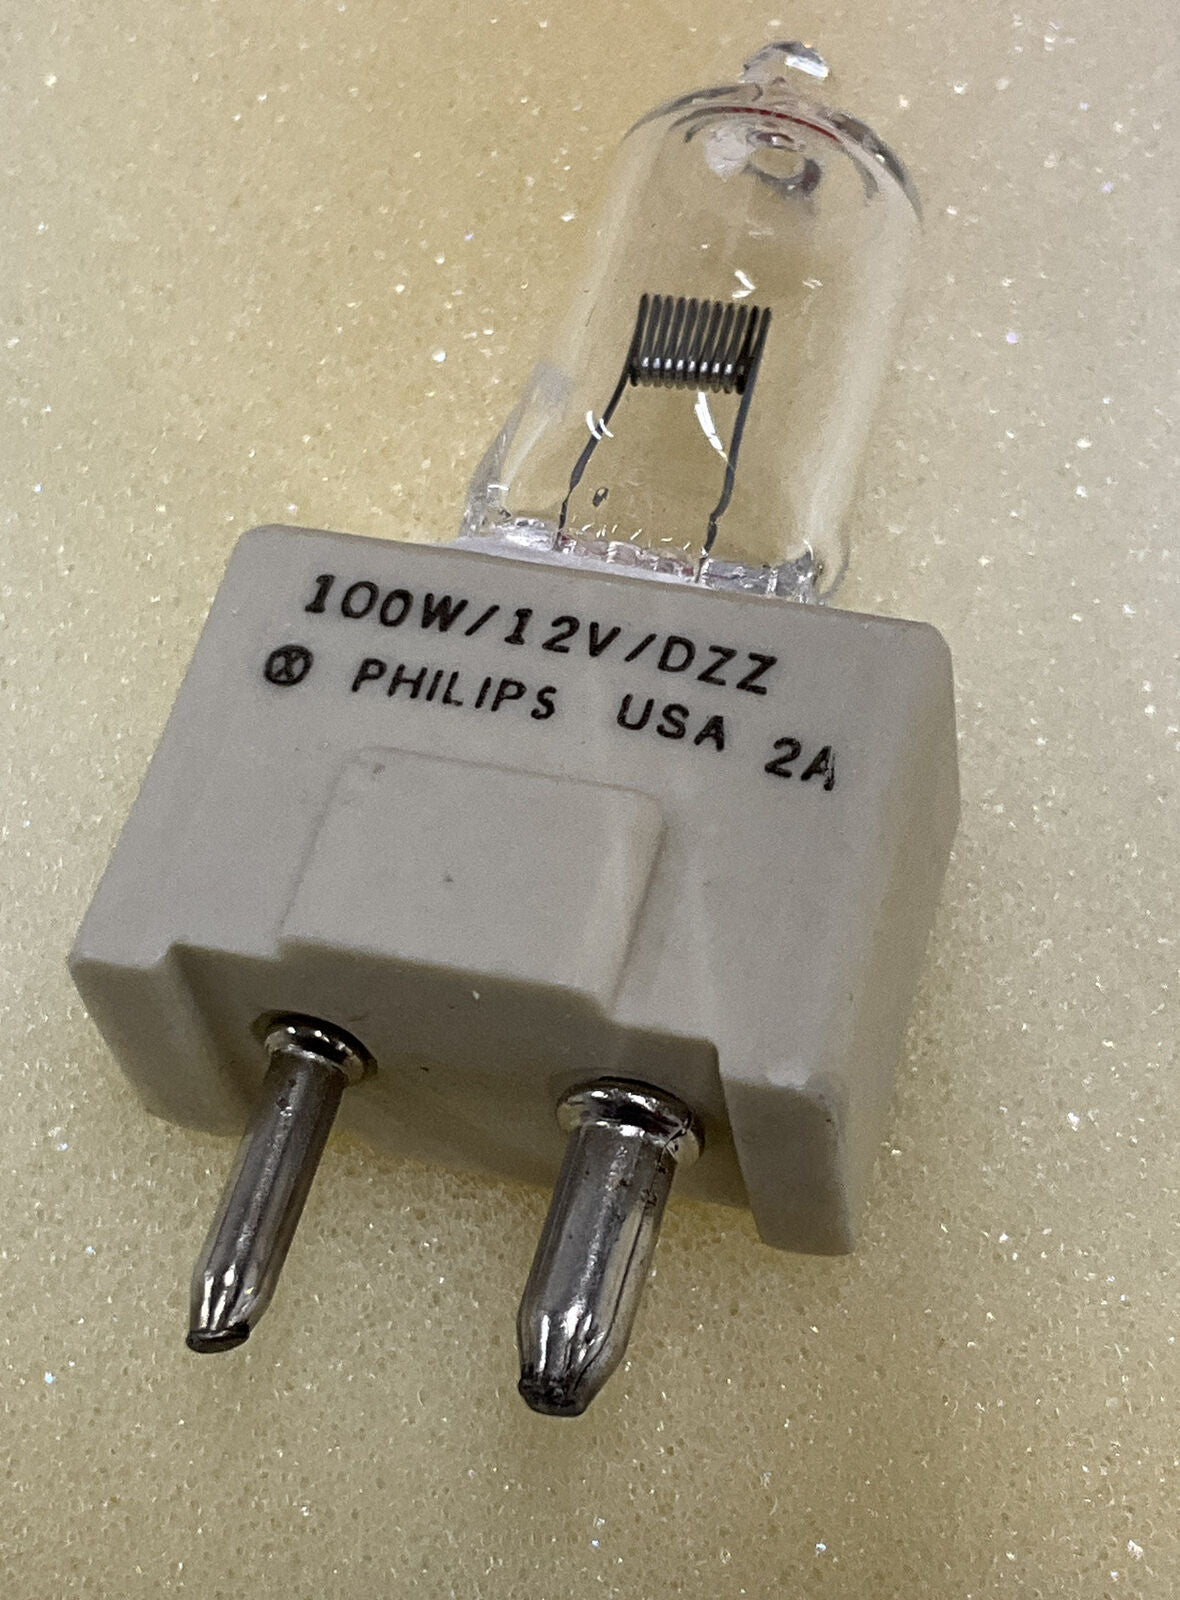 Philips DZZ 100W 12V Projection Lamp / Bulb (GR231) - 0